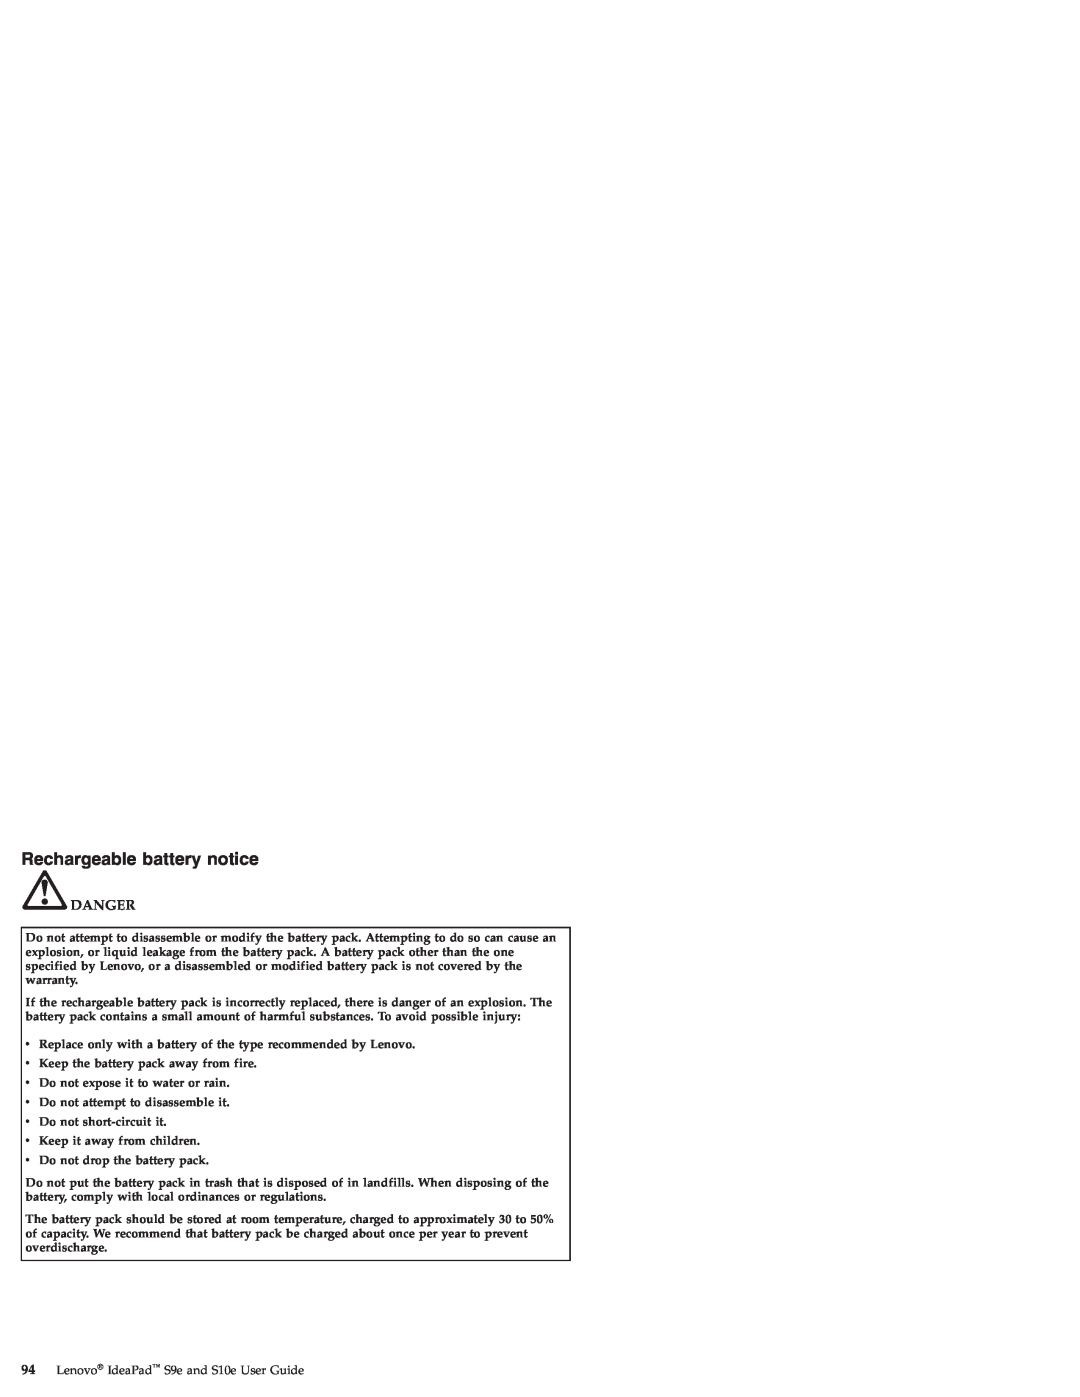 Lenovo S10E, S9E manual Rechargeable battery notice, Danger, Lenovo IdeaPad S9e and S10e User Guide 